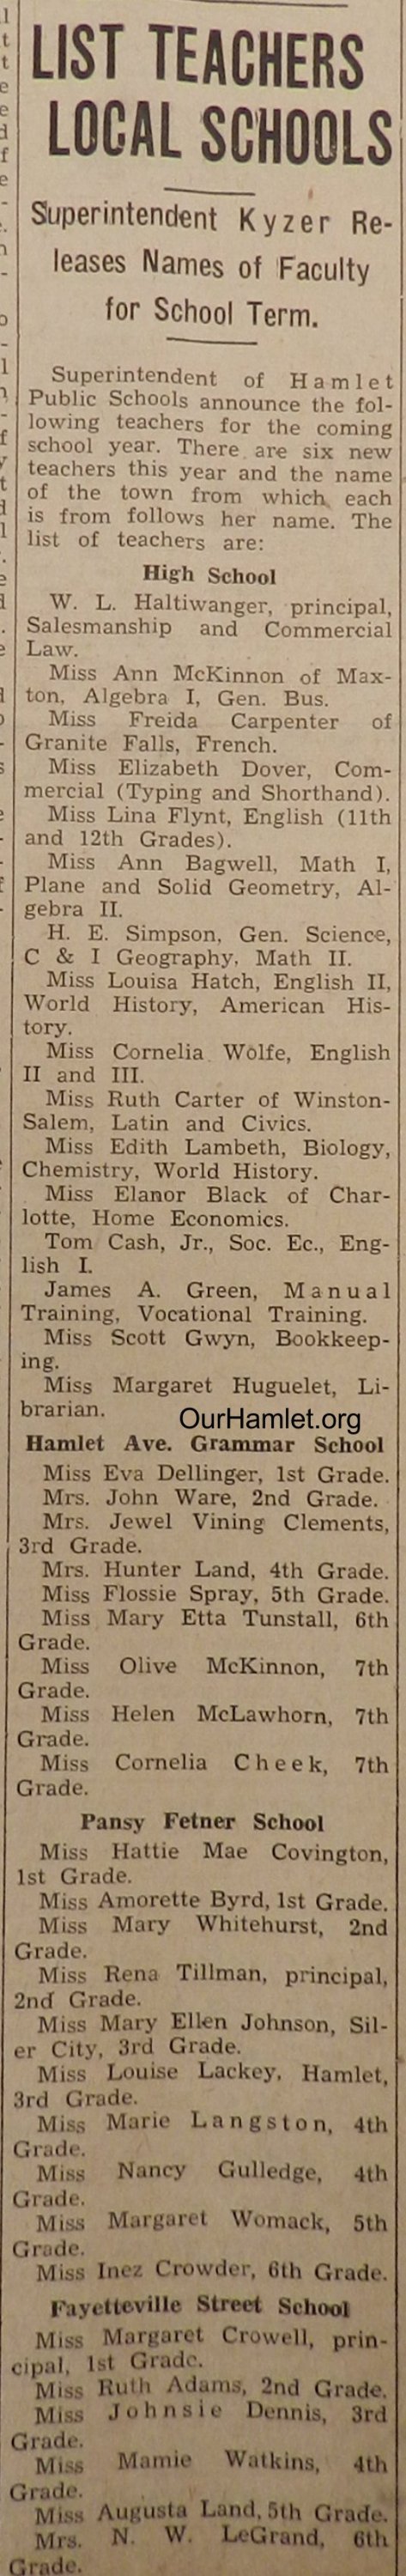 1939 School Teachers OH.jpg